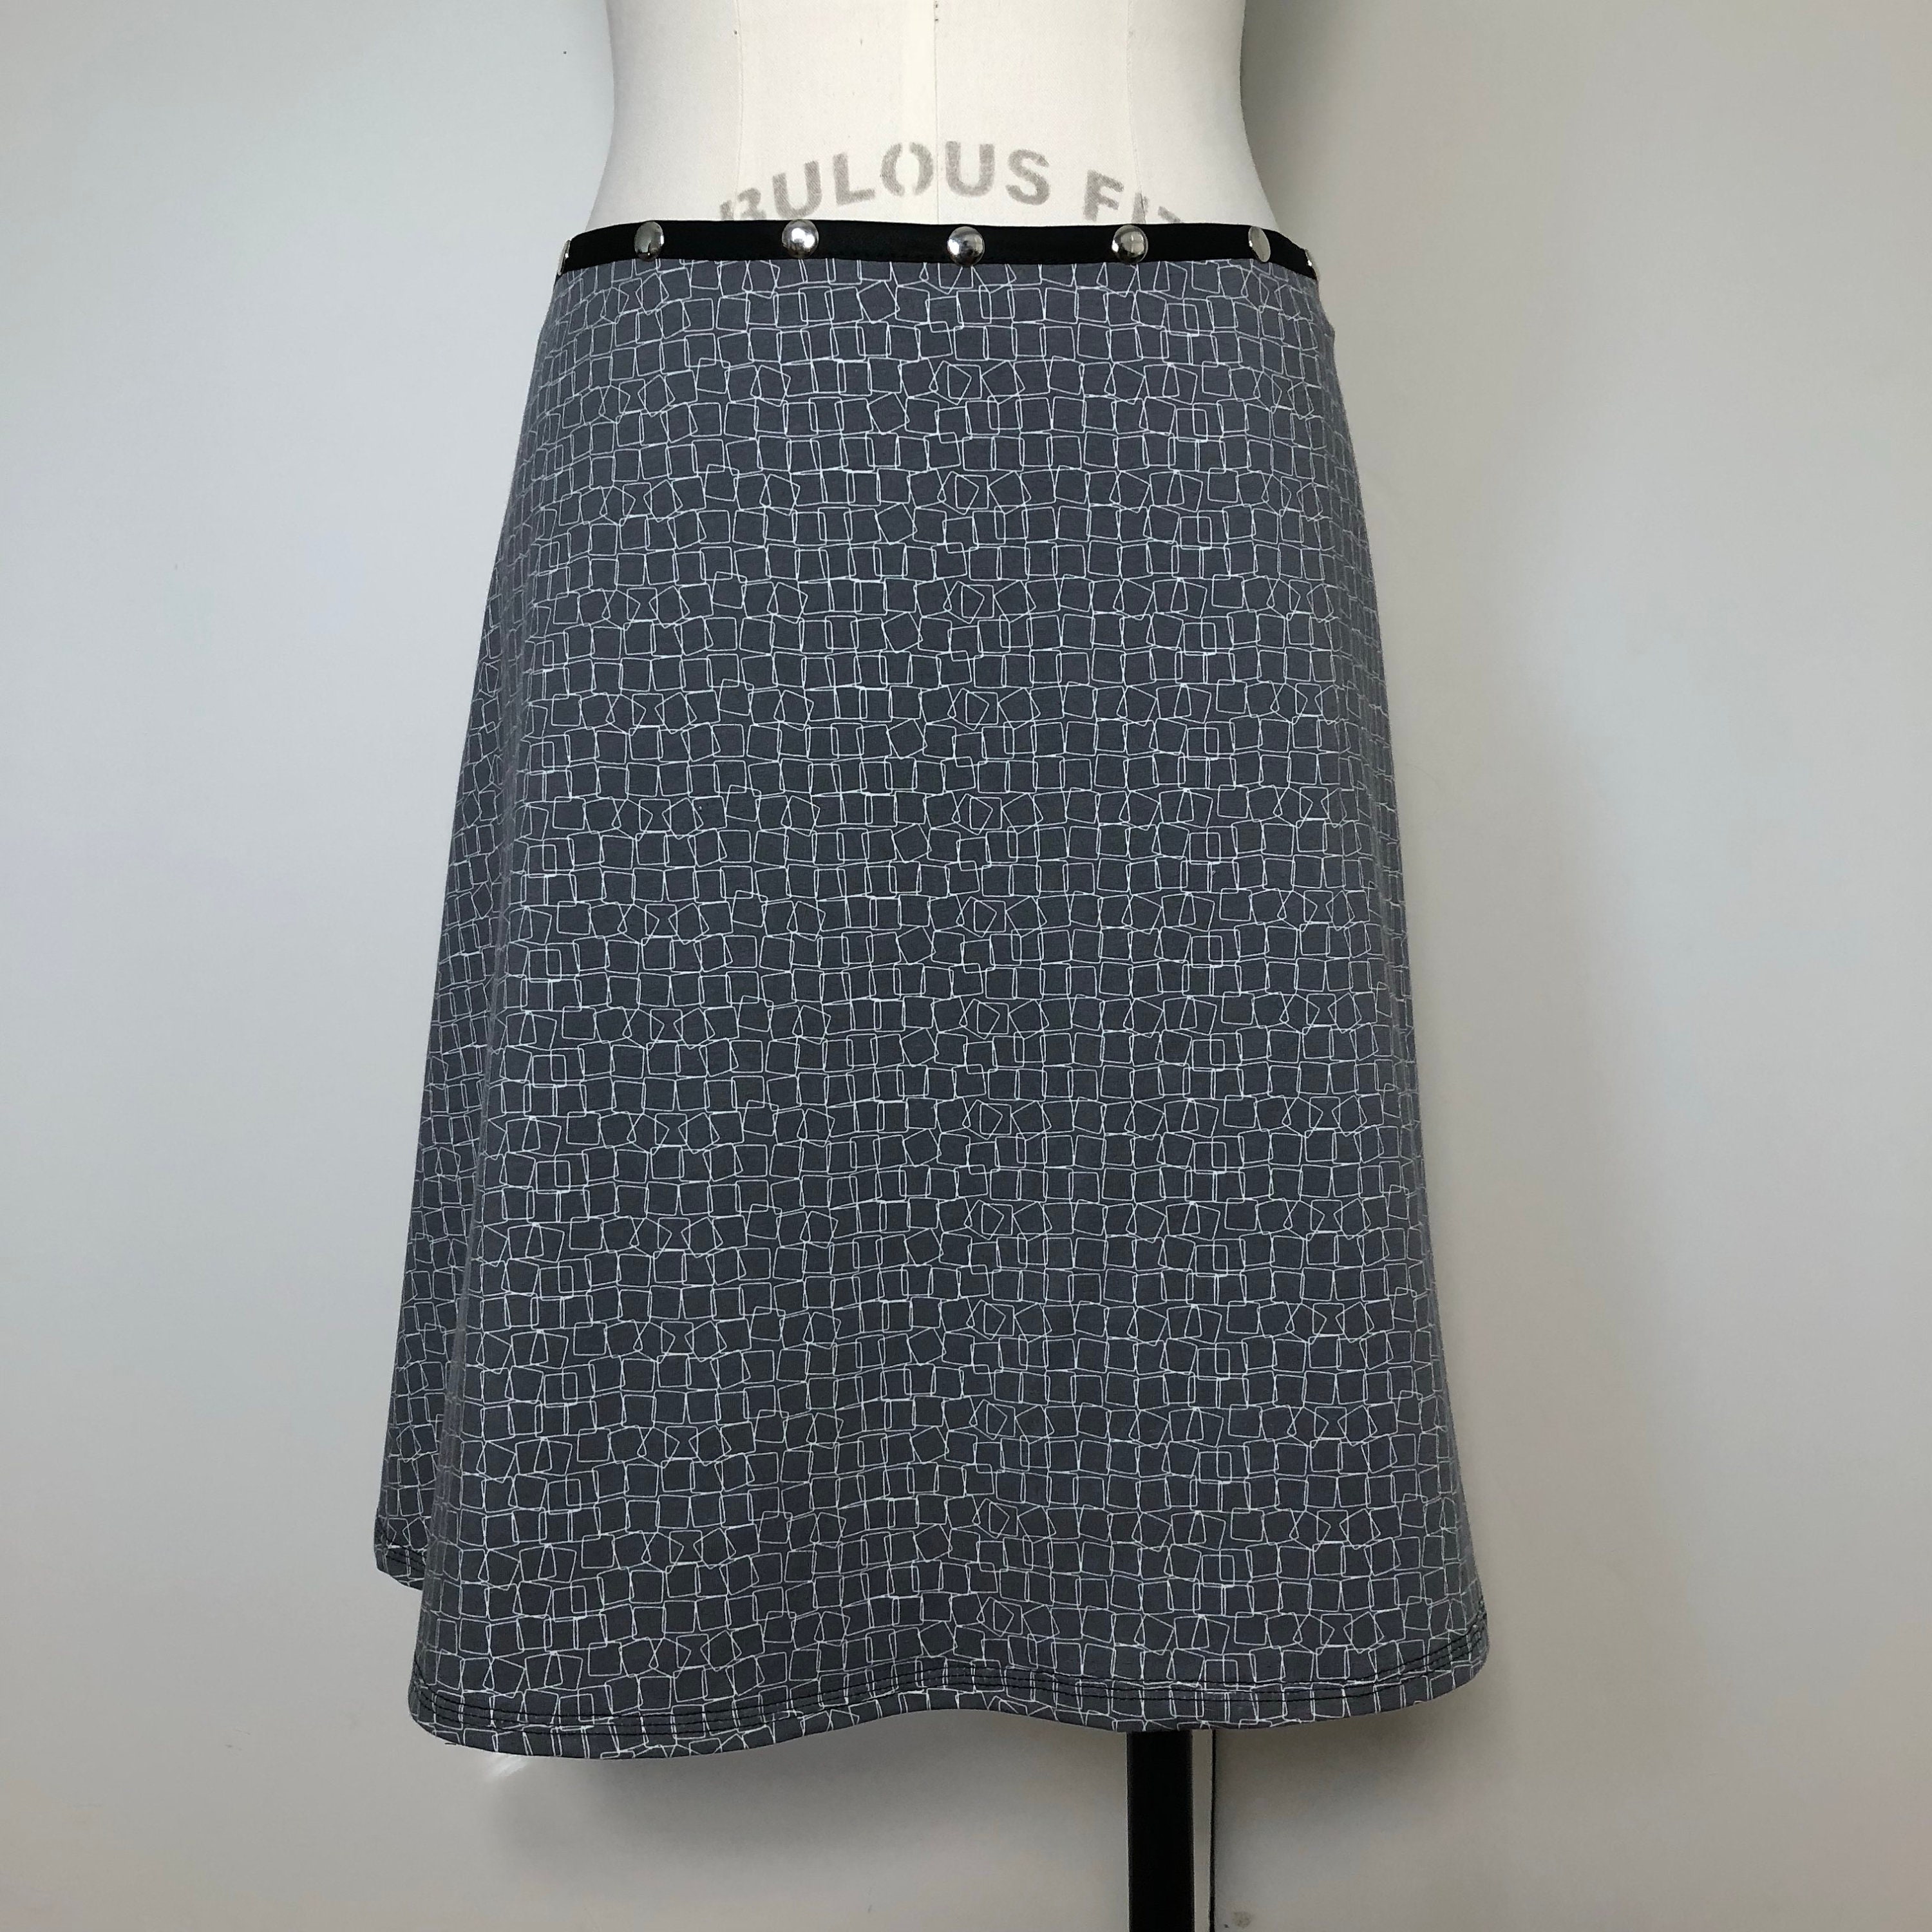 Snap Skirt, Adjustable size, gray and white skirt, Erin MacLeod,